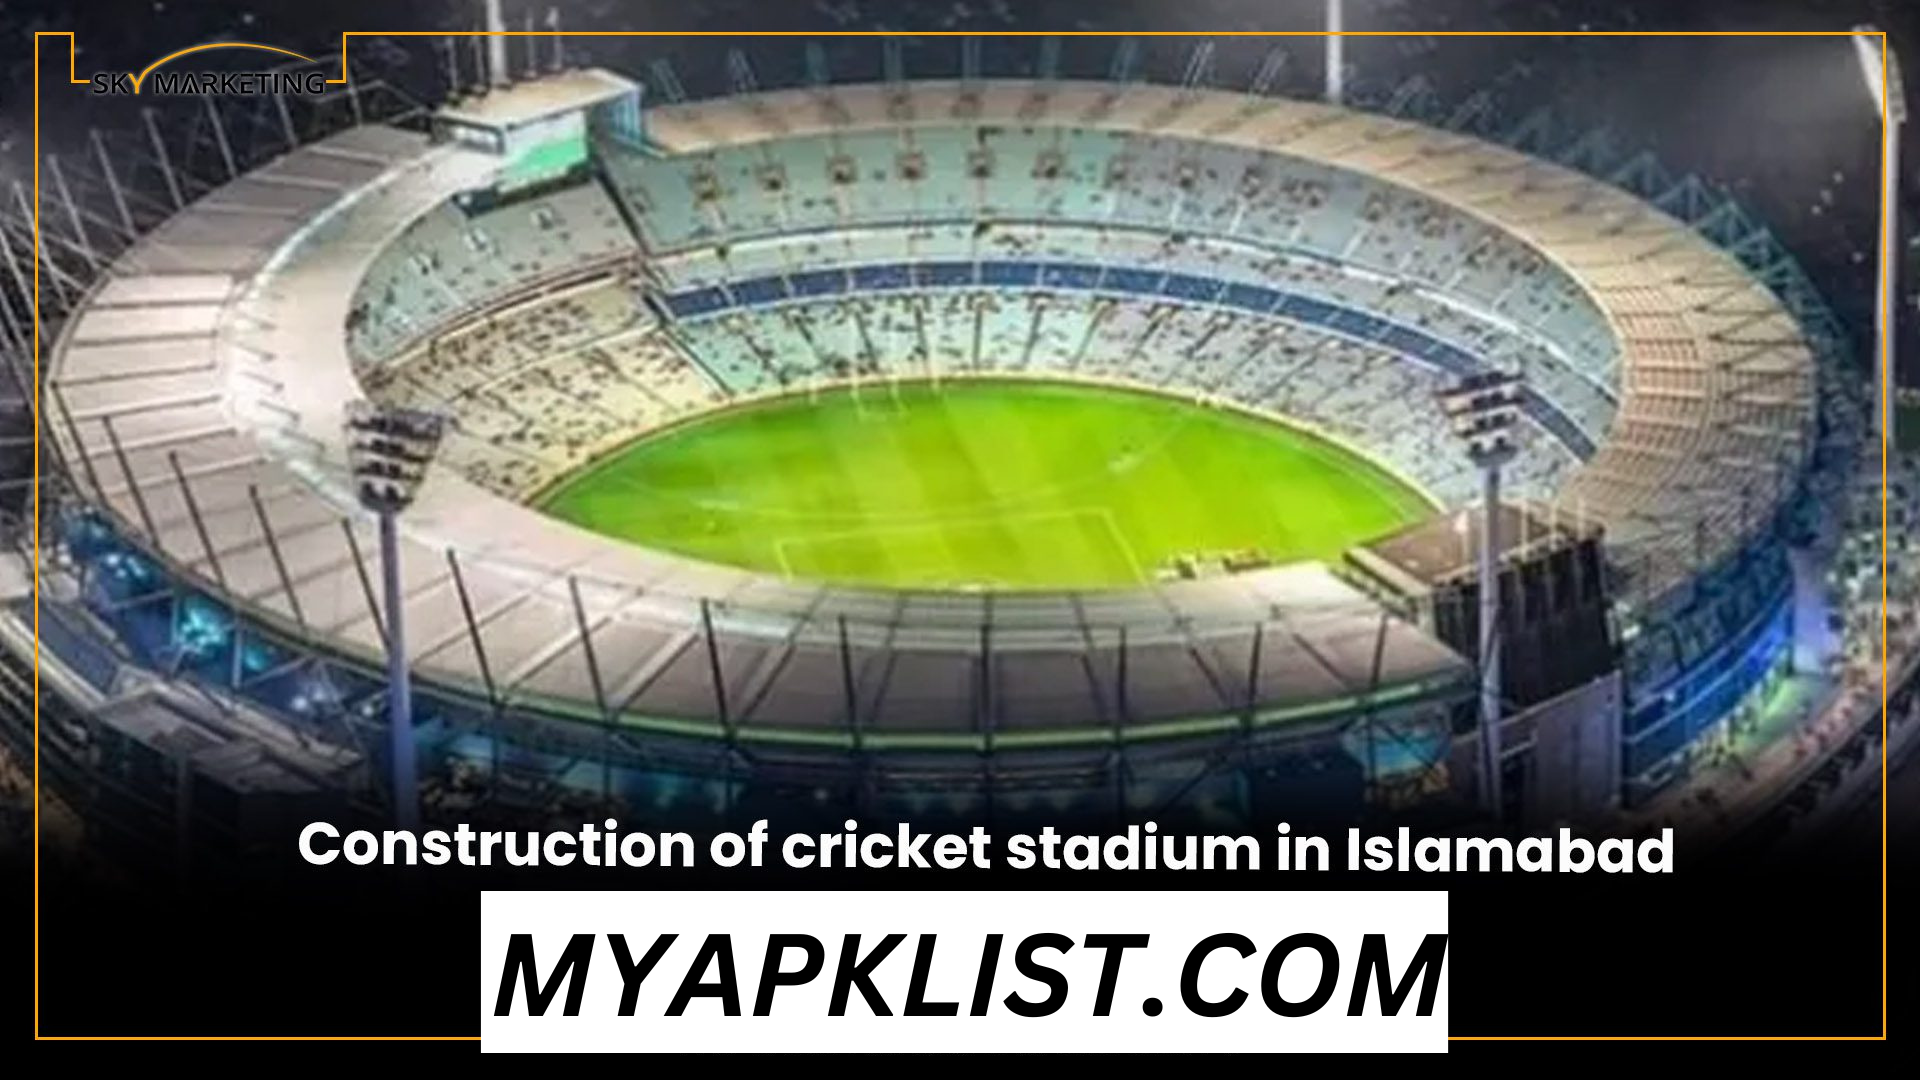 Cricket Ground Turns Into a Legendary Match